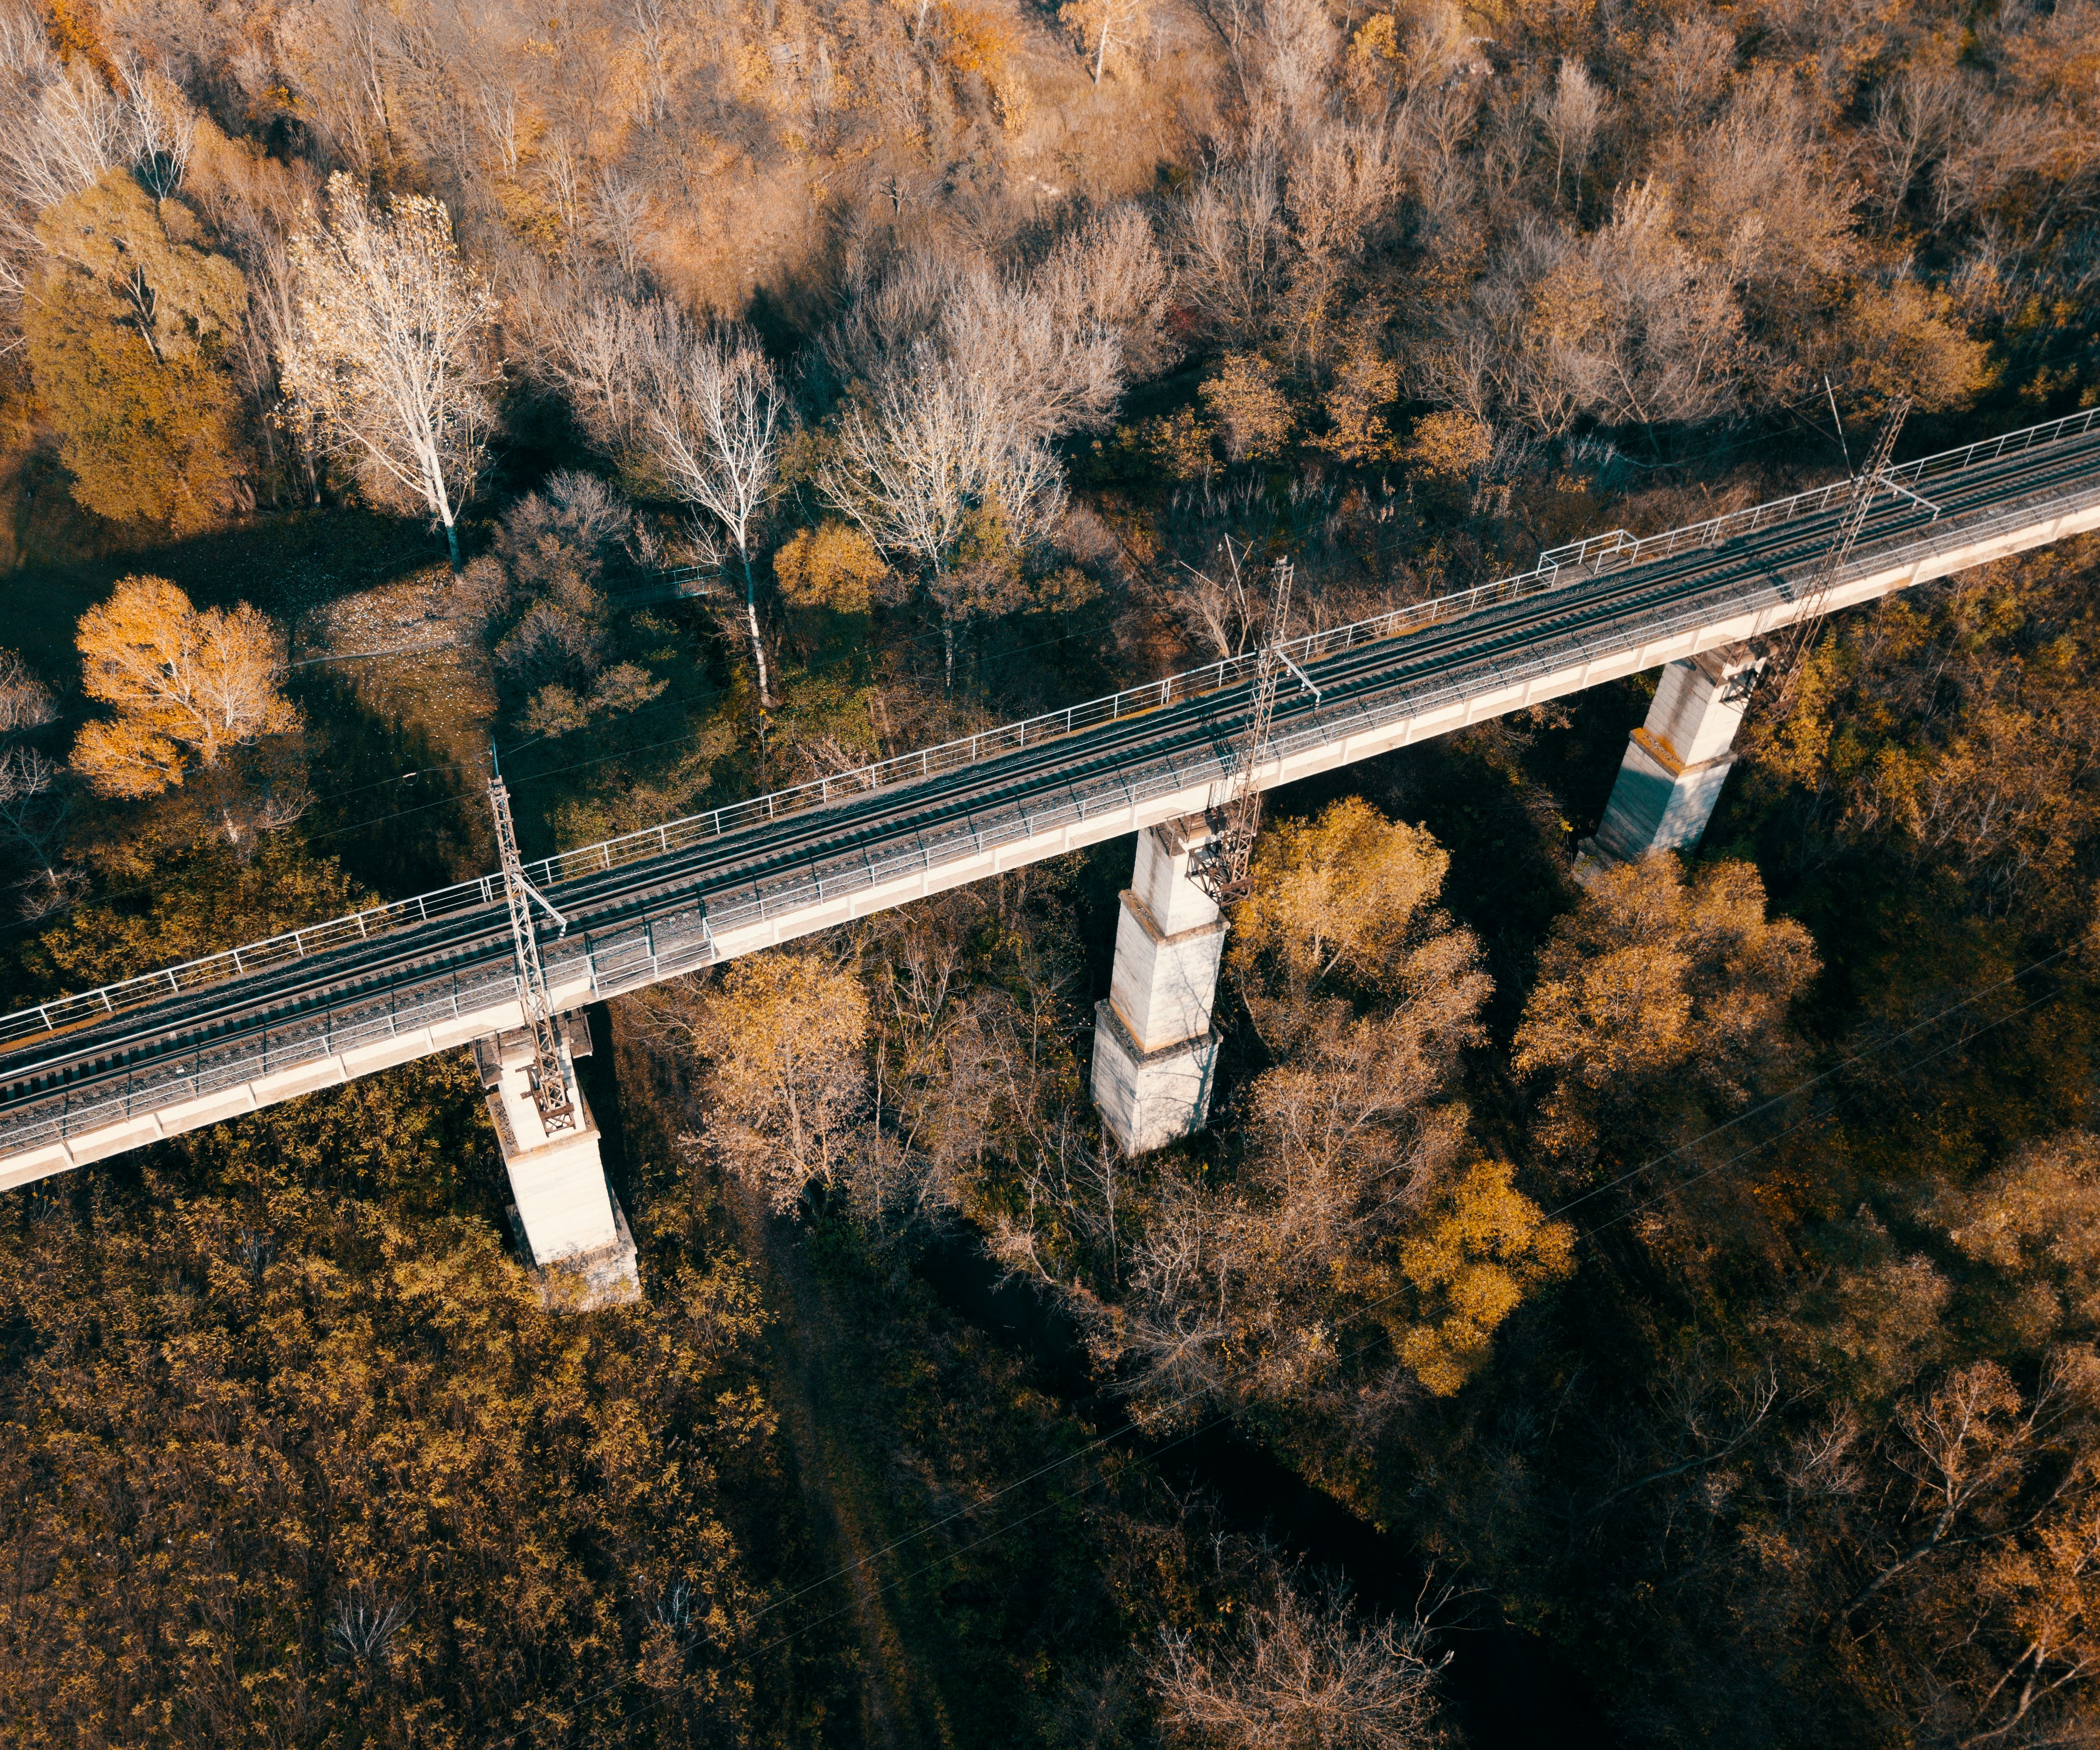 bird's-eye view photography of bridge in between leafed trees